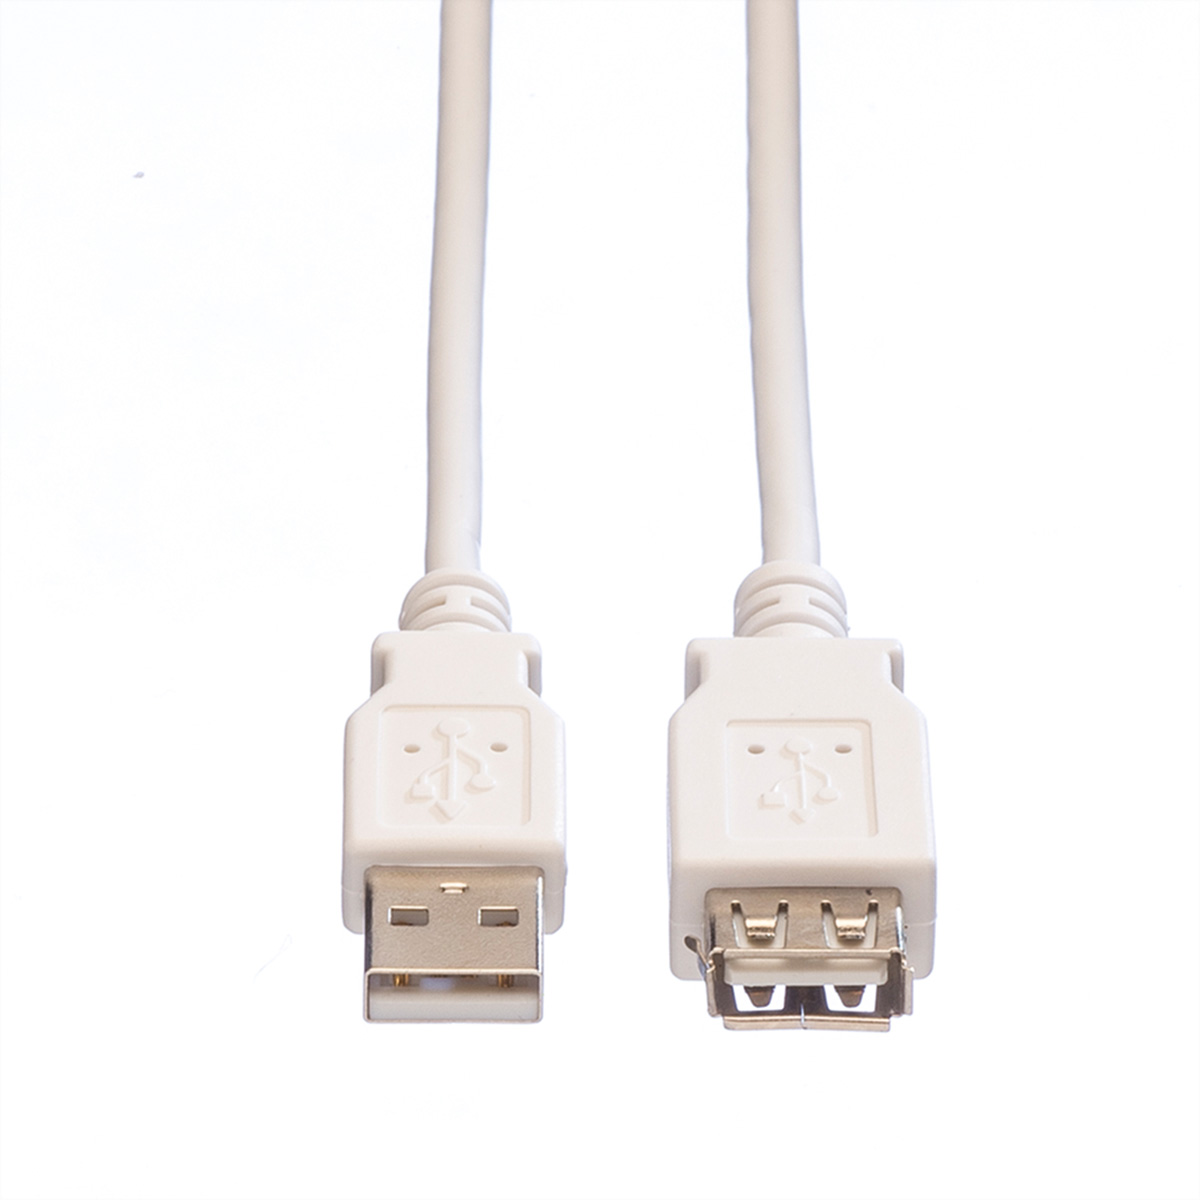 USB Verlängerungskabel 2.0 2.0 VALUE USB Kabel